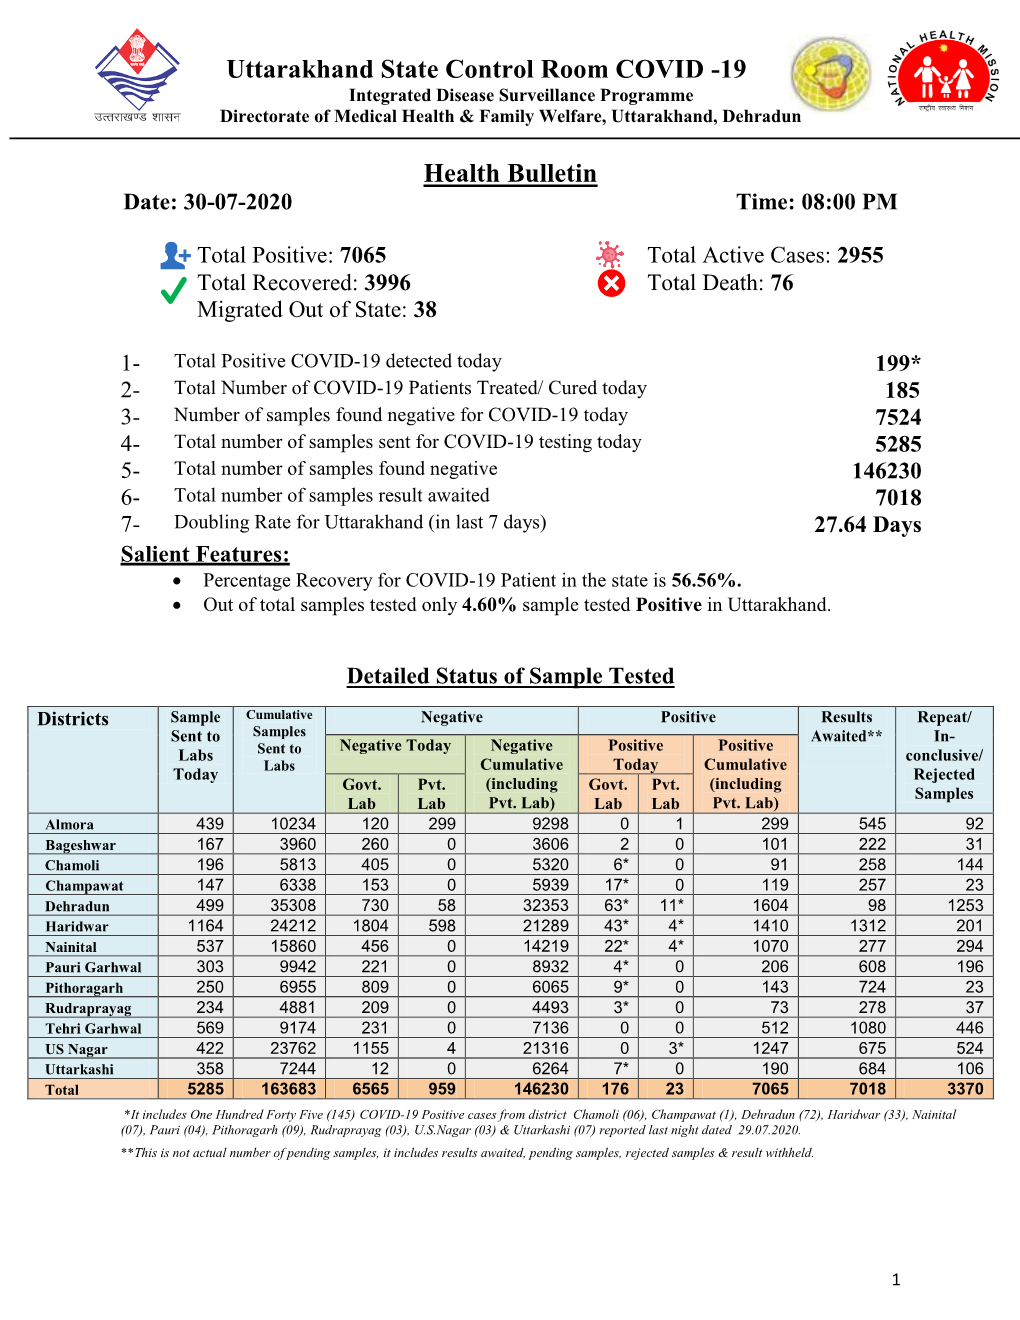 Health Bulletin COVID 19 Uttarakhand 30 July 2020